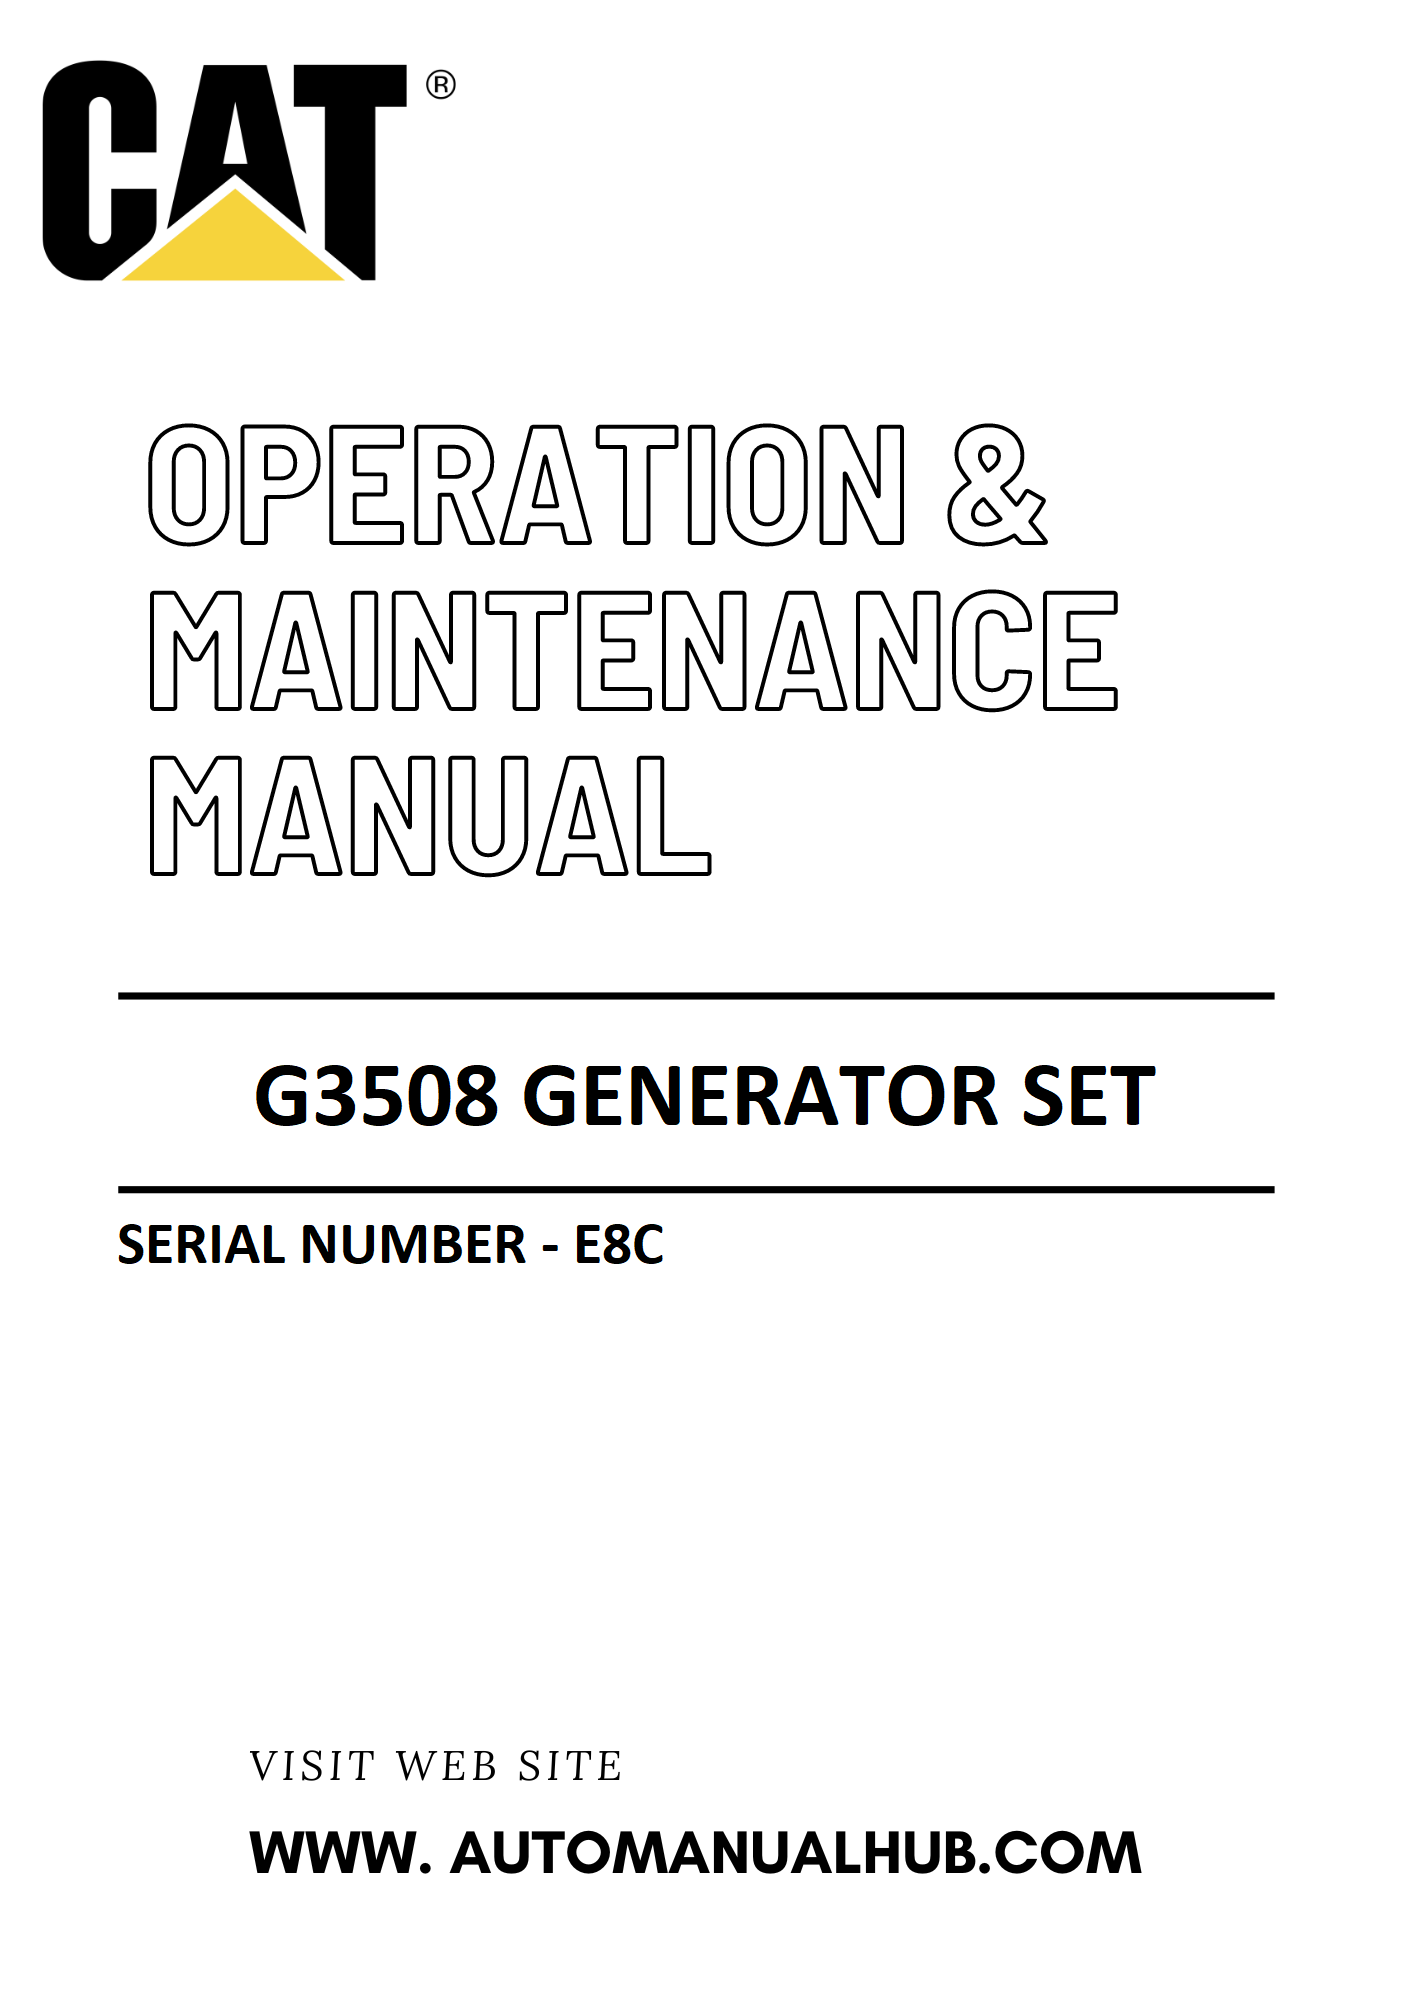 G3508 Caterpillar Generator Set Operation & Maintenance Manual Serial Number - E8C PDF Download